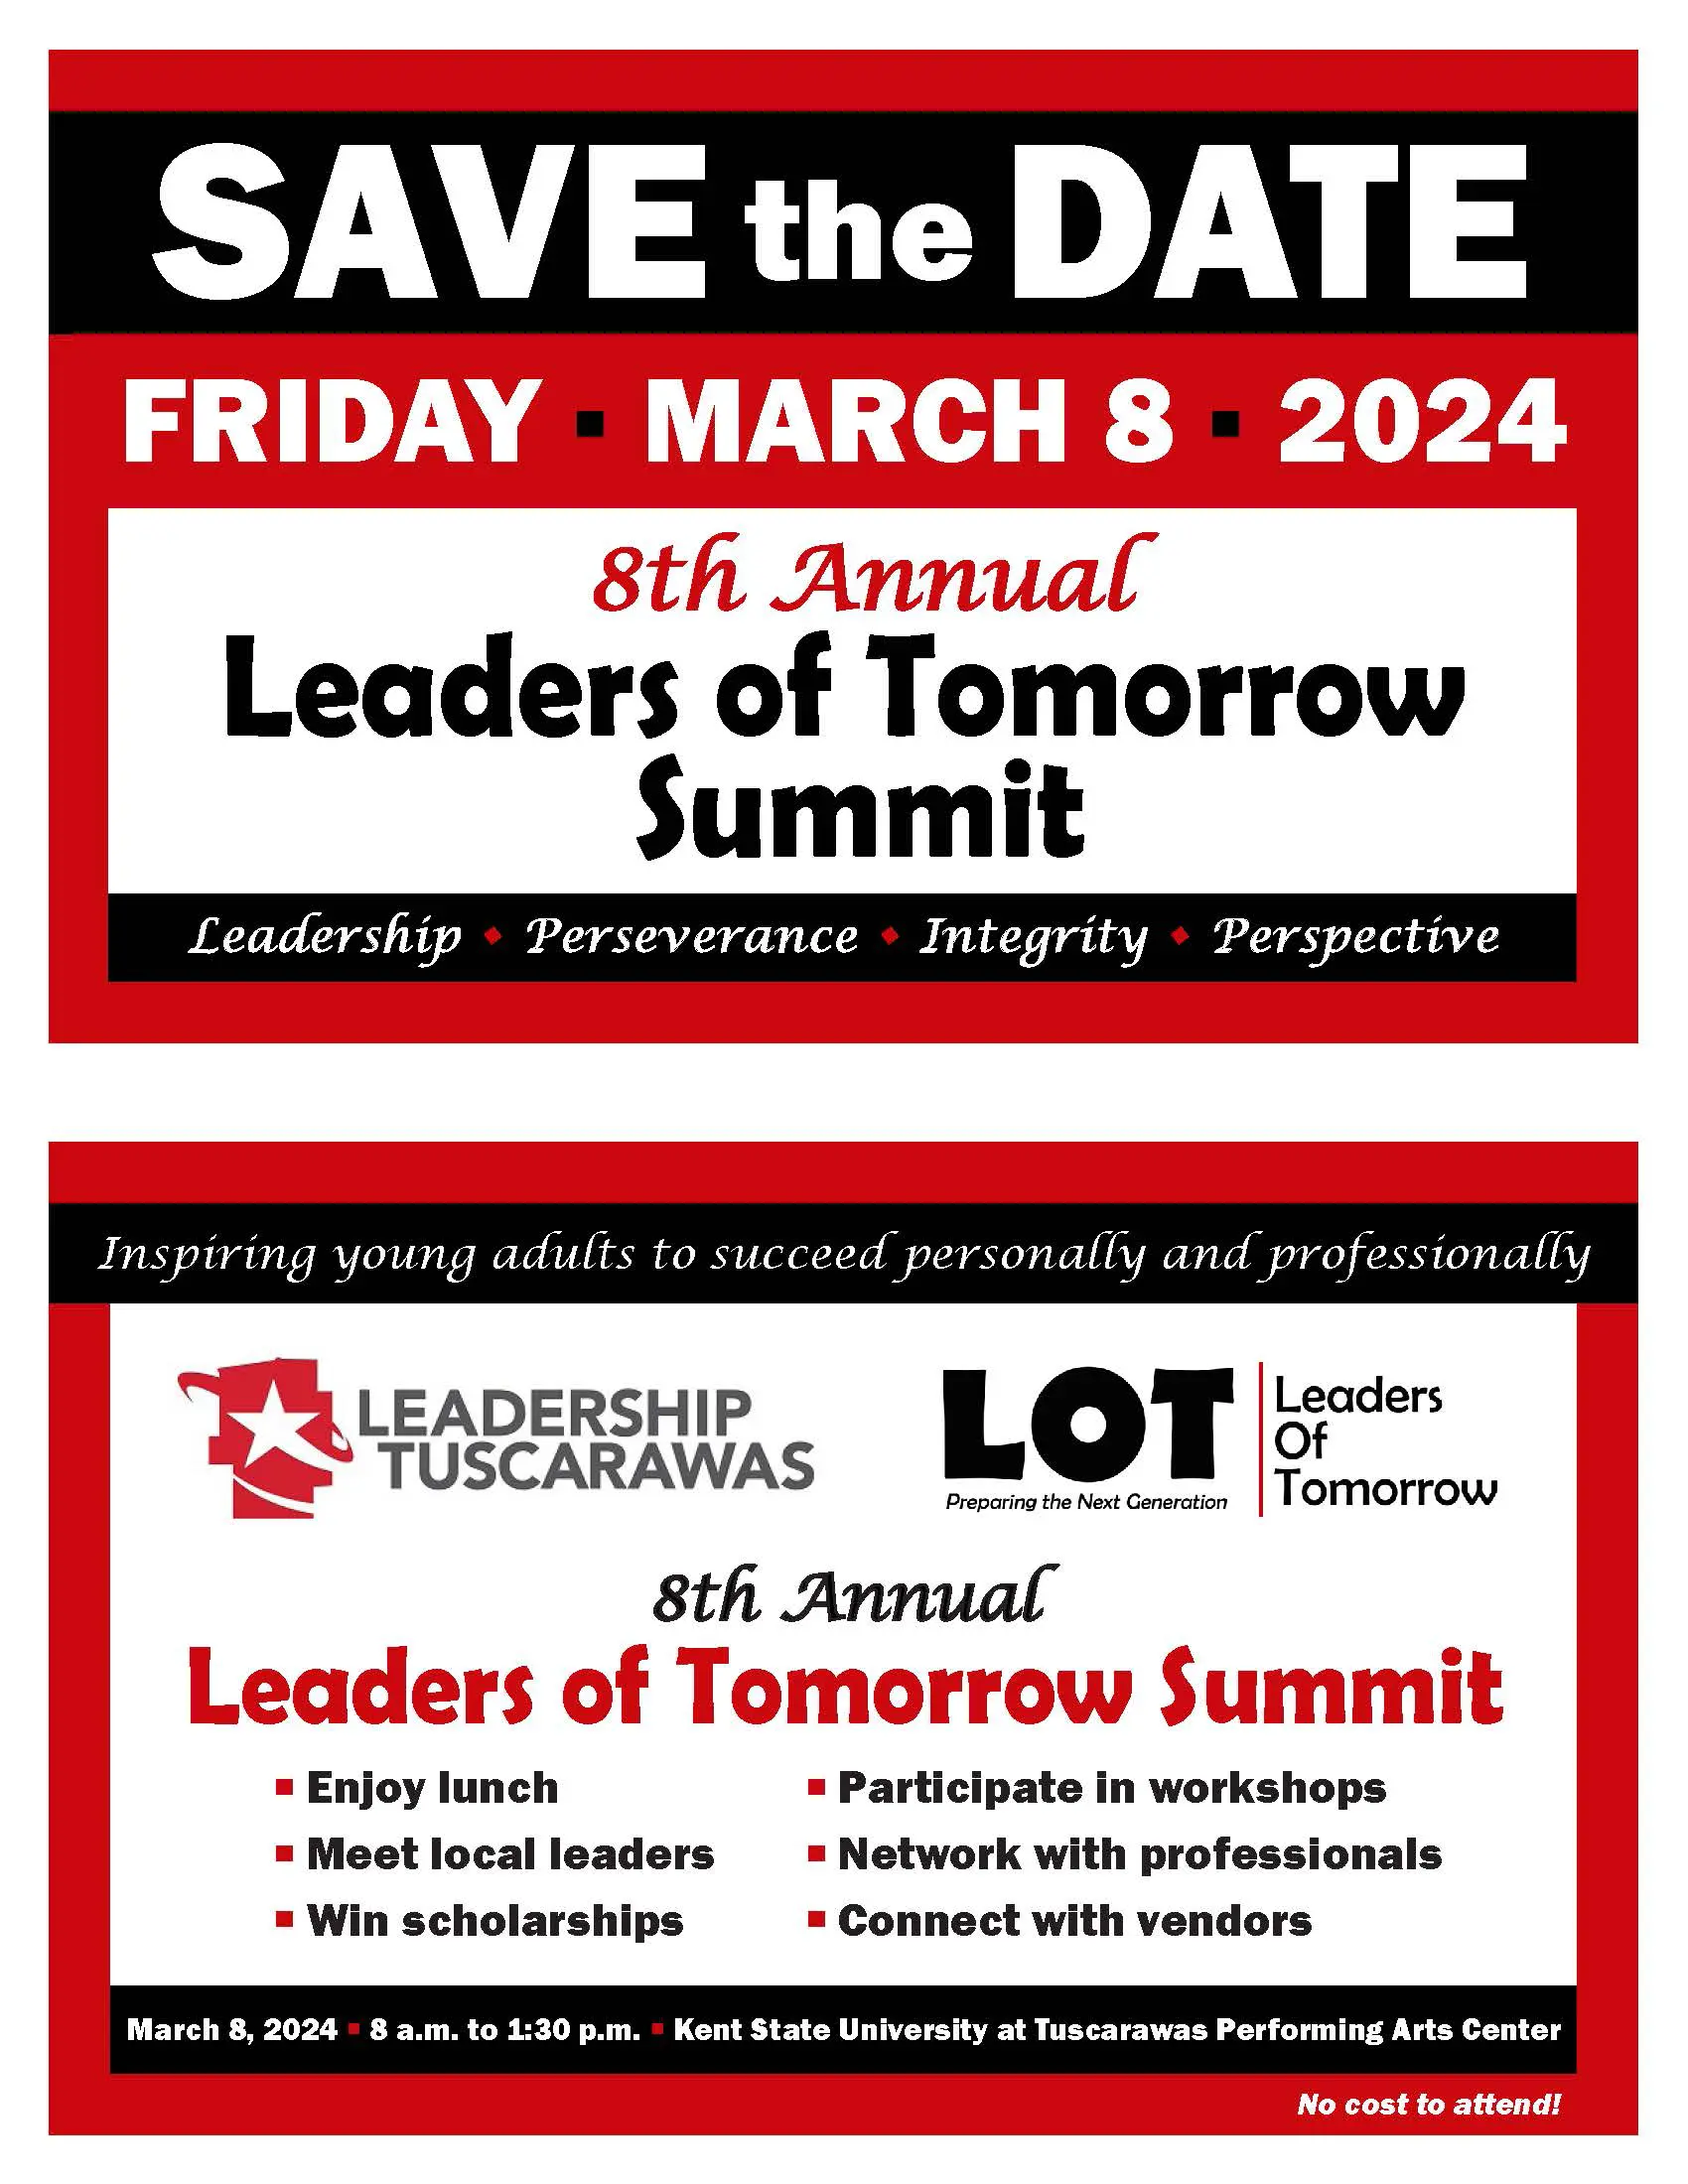 Leaders of Tomorrow Summit